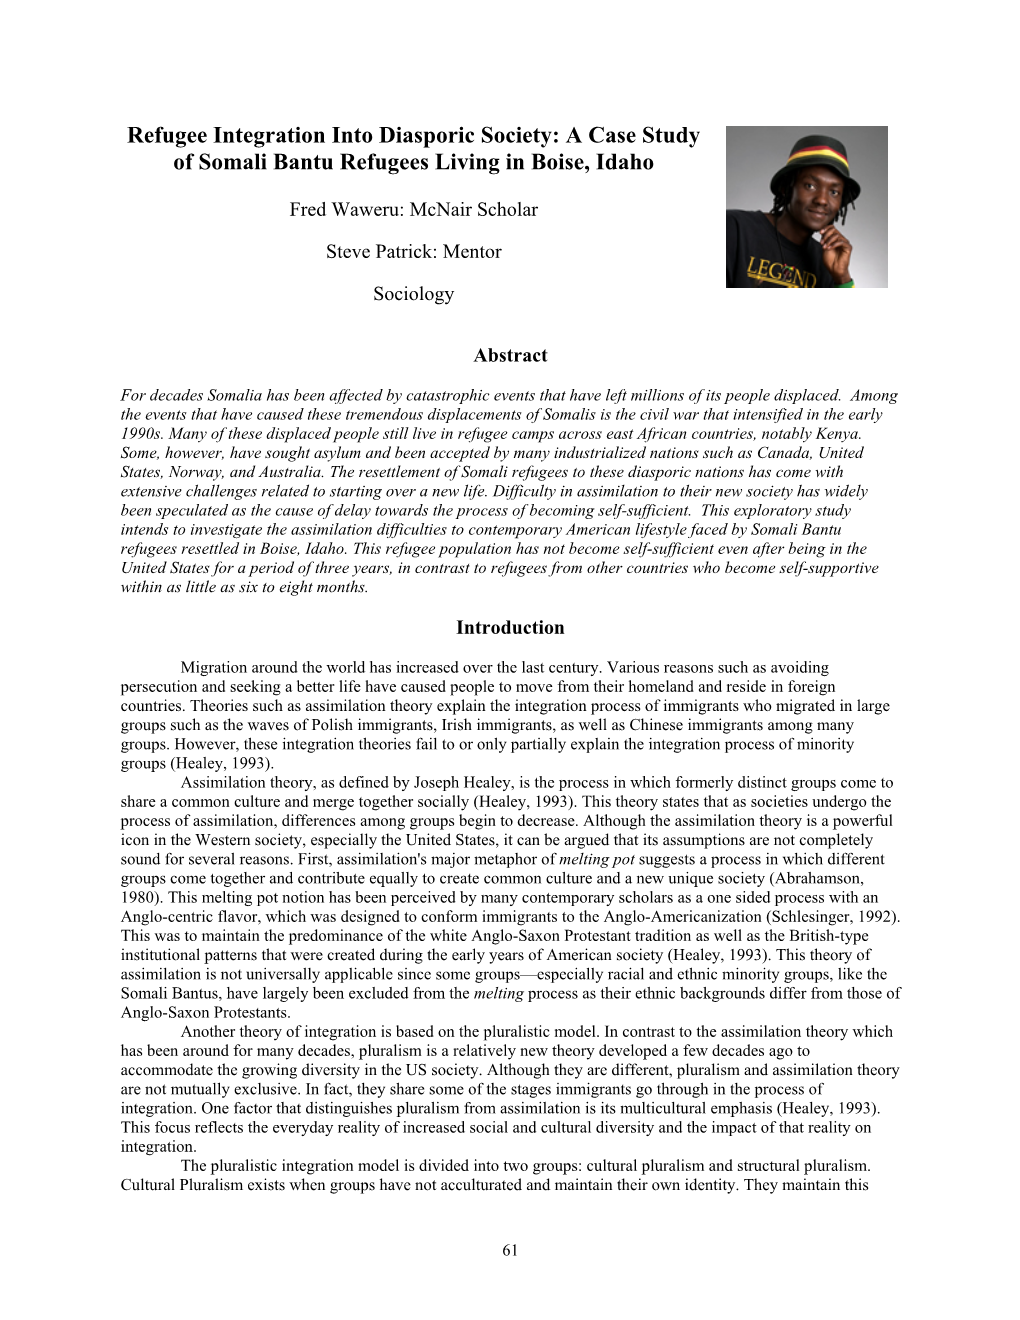 A Case Study of Somali Bantu Refugees Living in Boise, Idaho